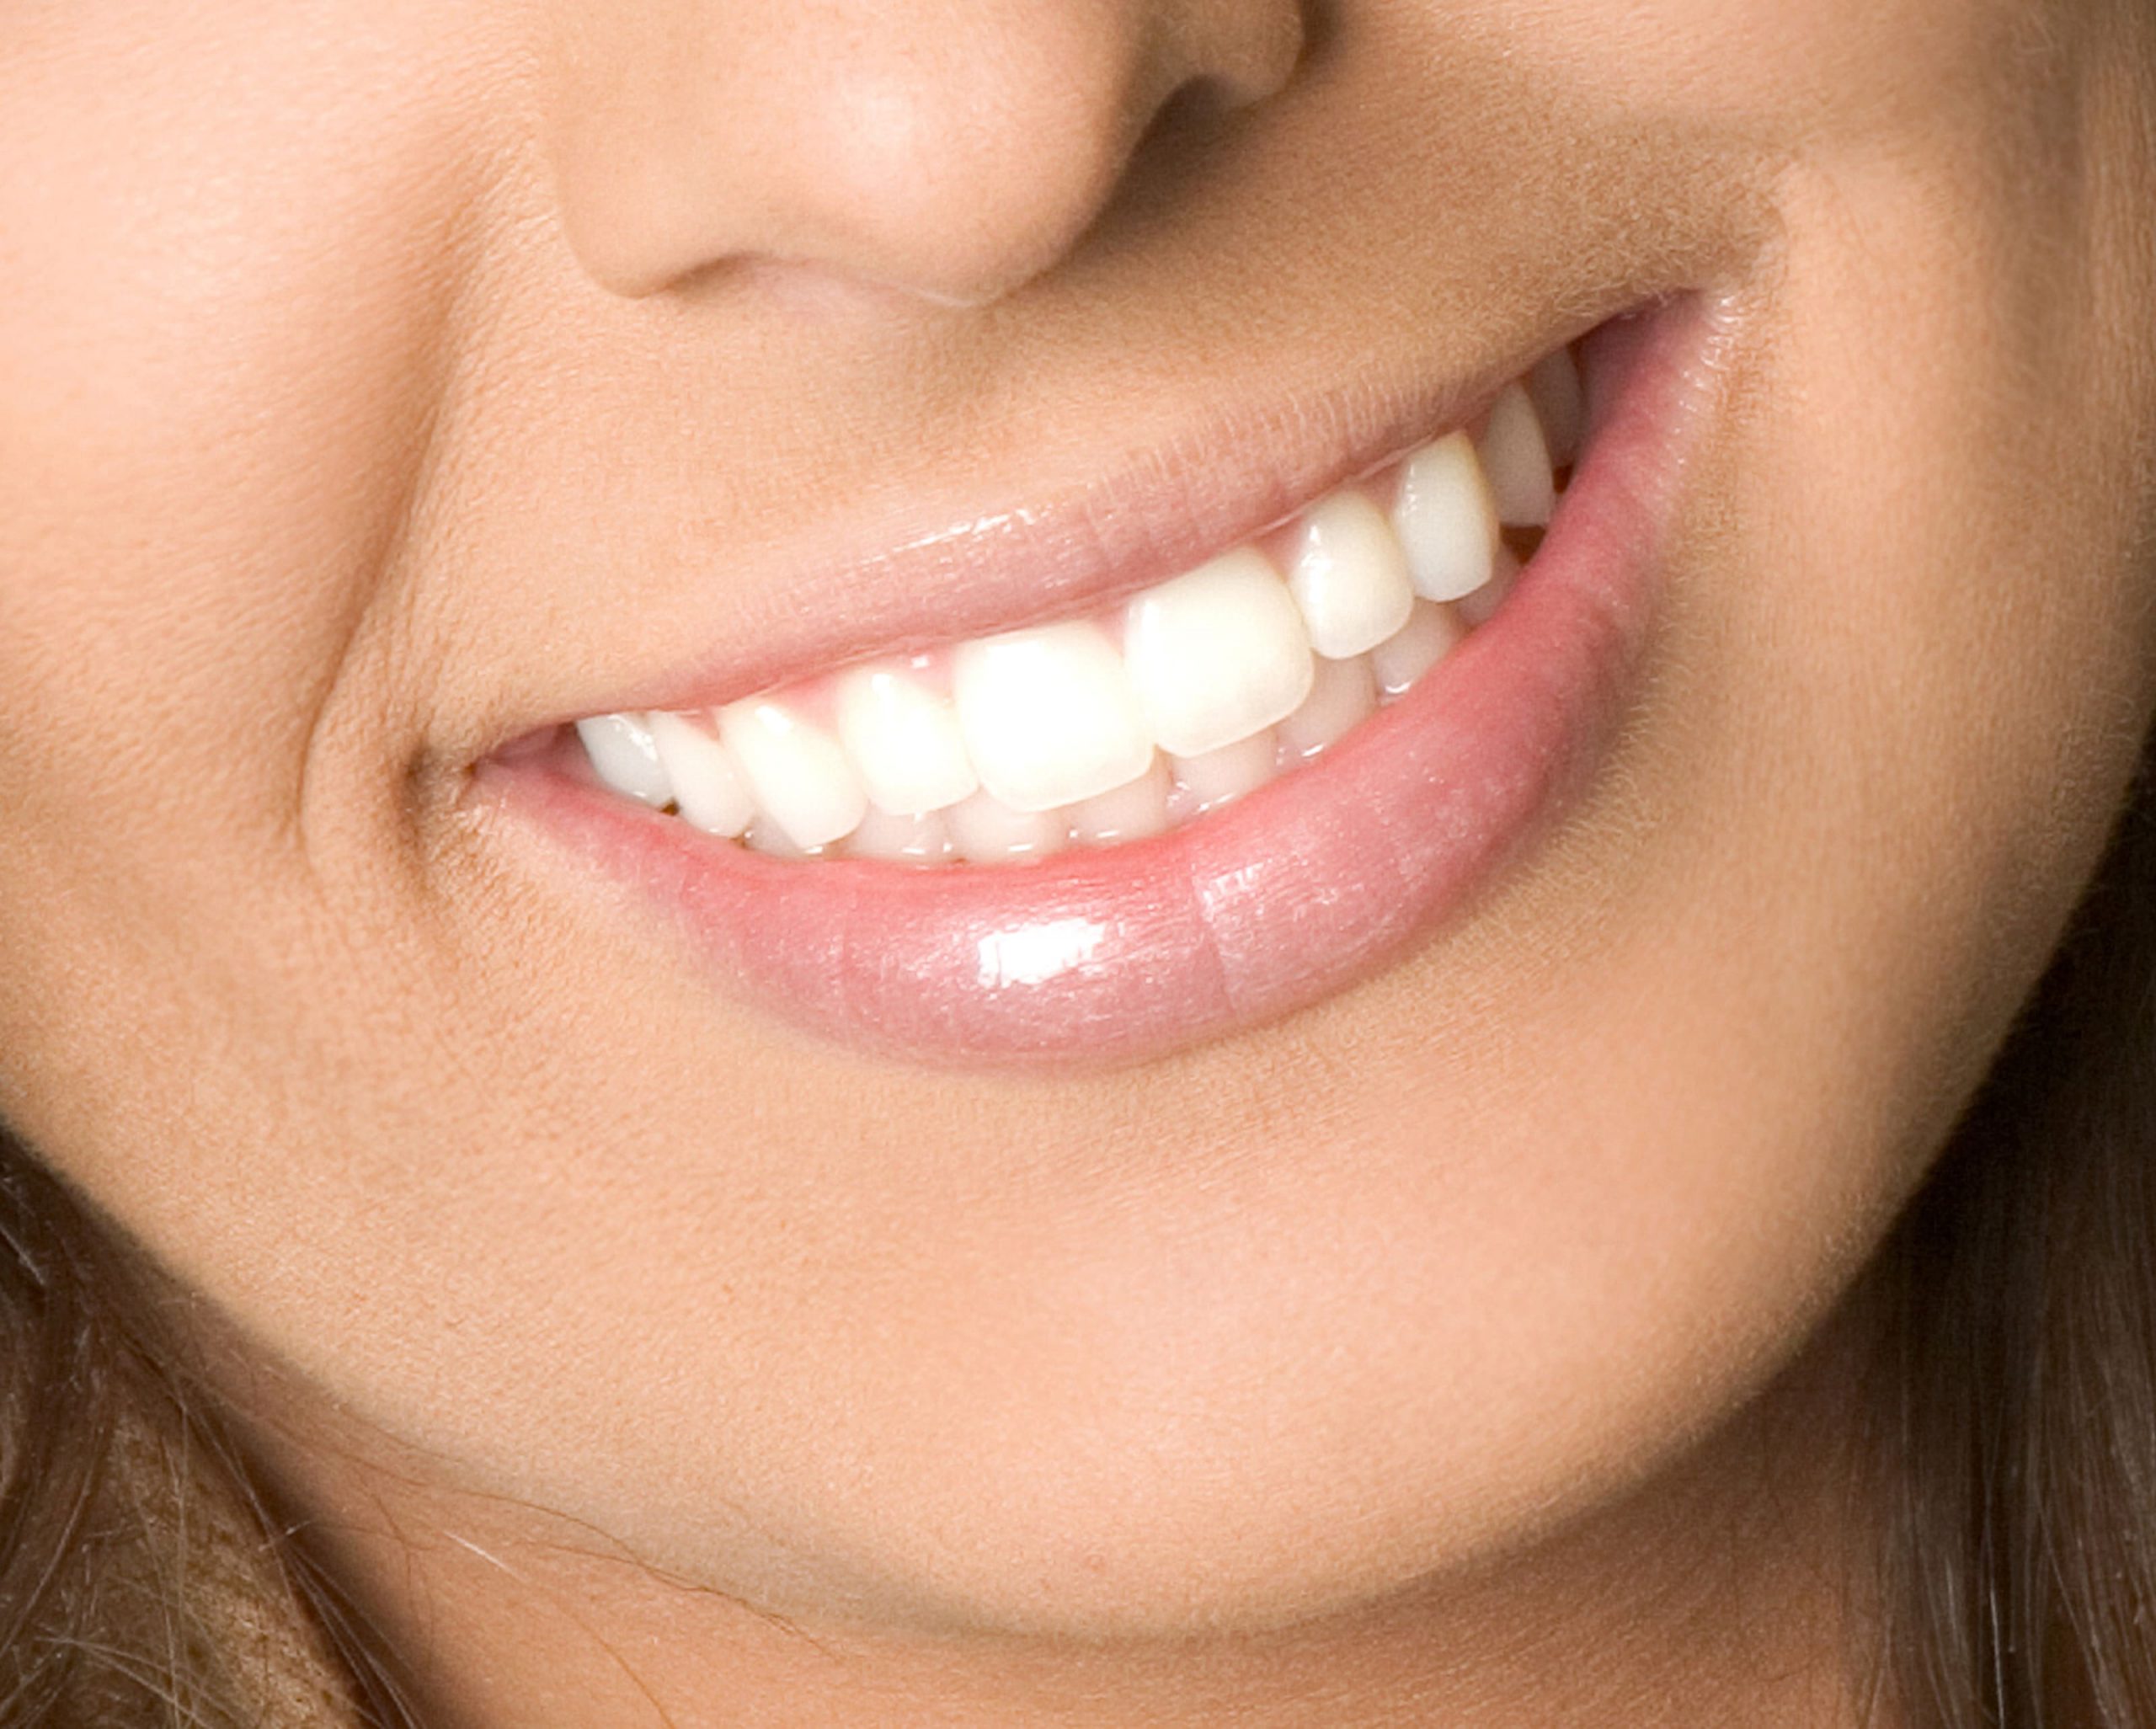 healthy-woman-teeth-and-smile-2022-11-22-16-23-29-utc (1)